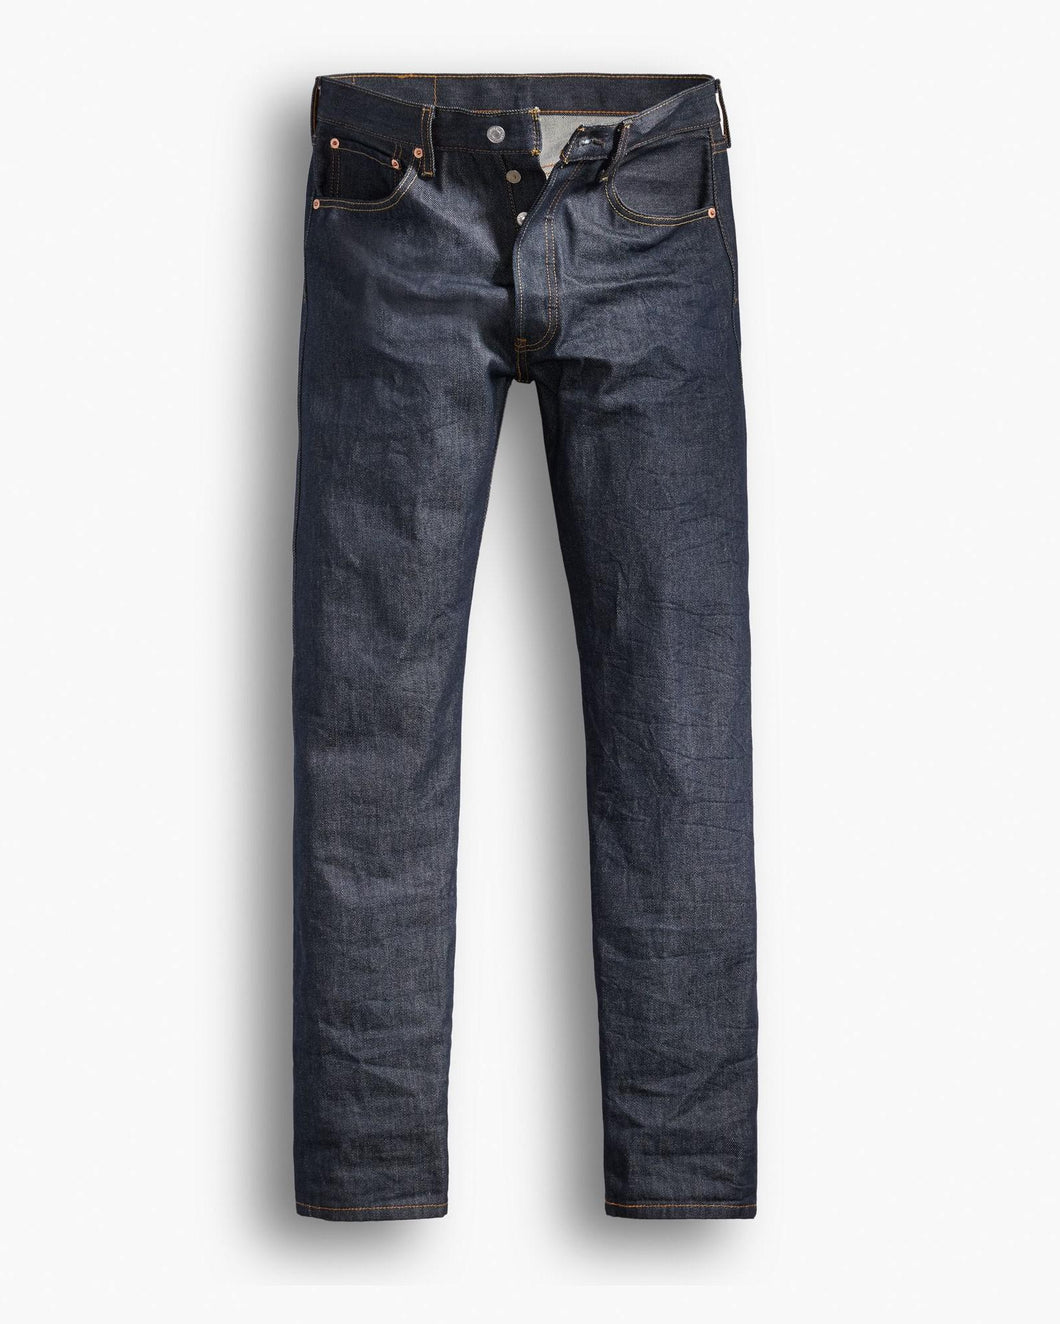 Levi's 501 Original Shrink-to-Fit Jeans